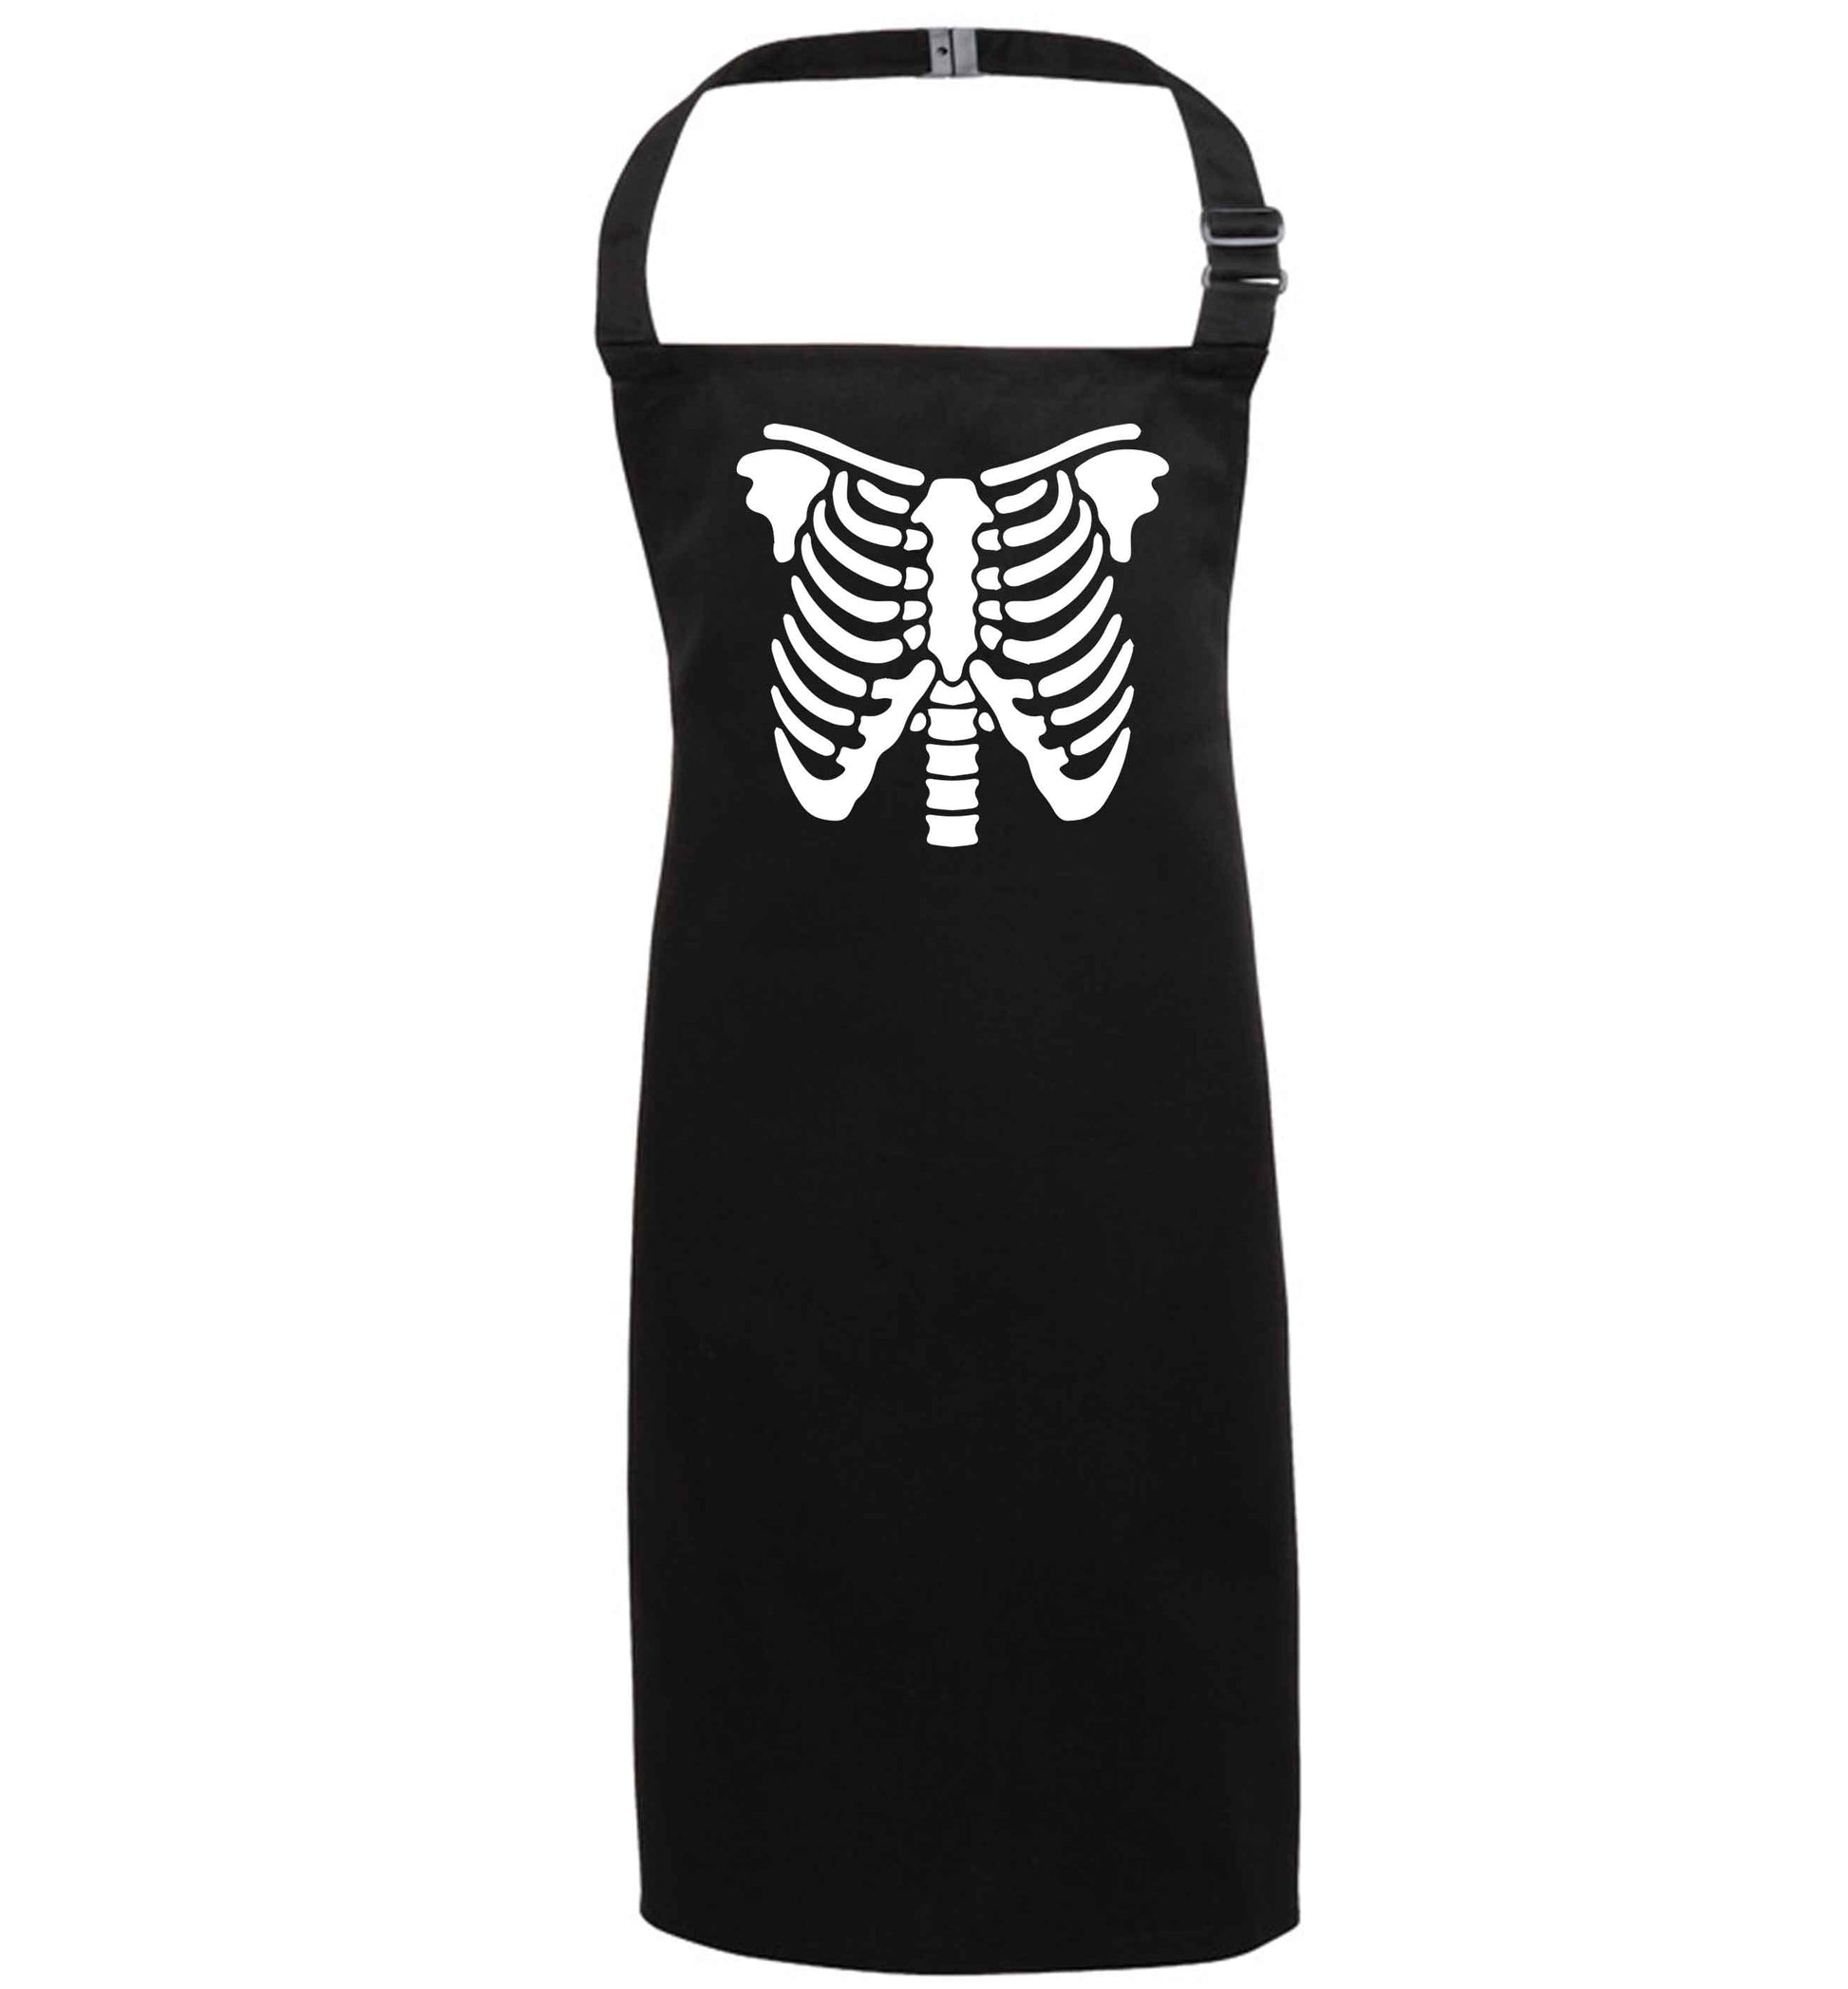 Skeleton ribcage black apron 7-10 years